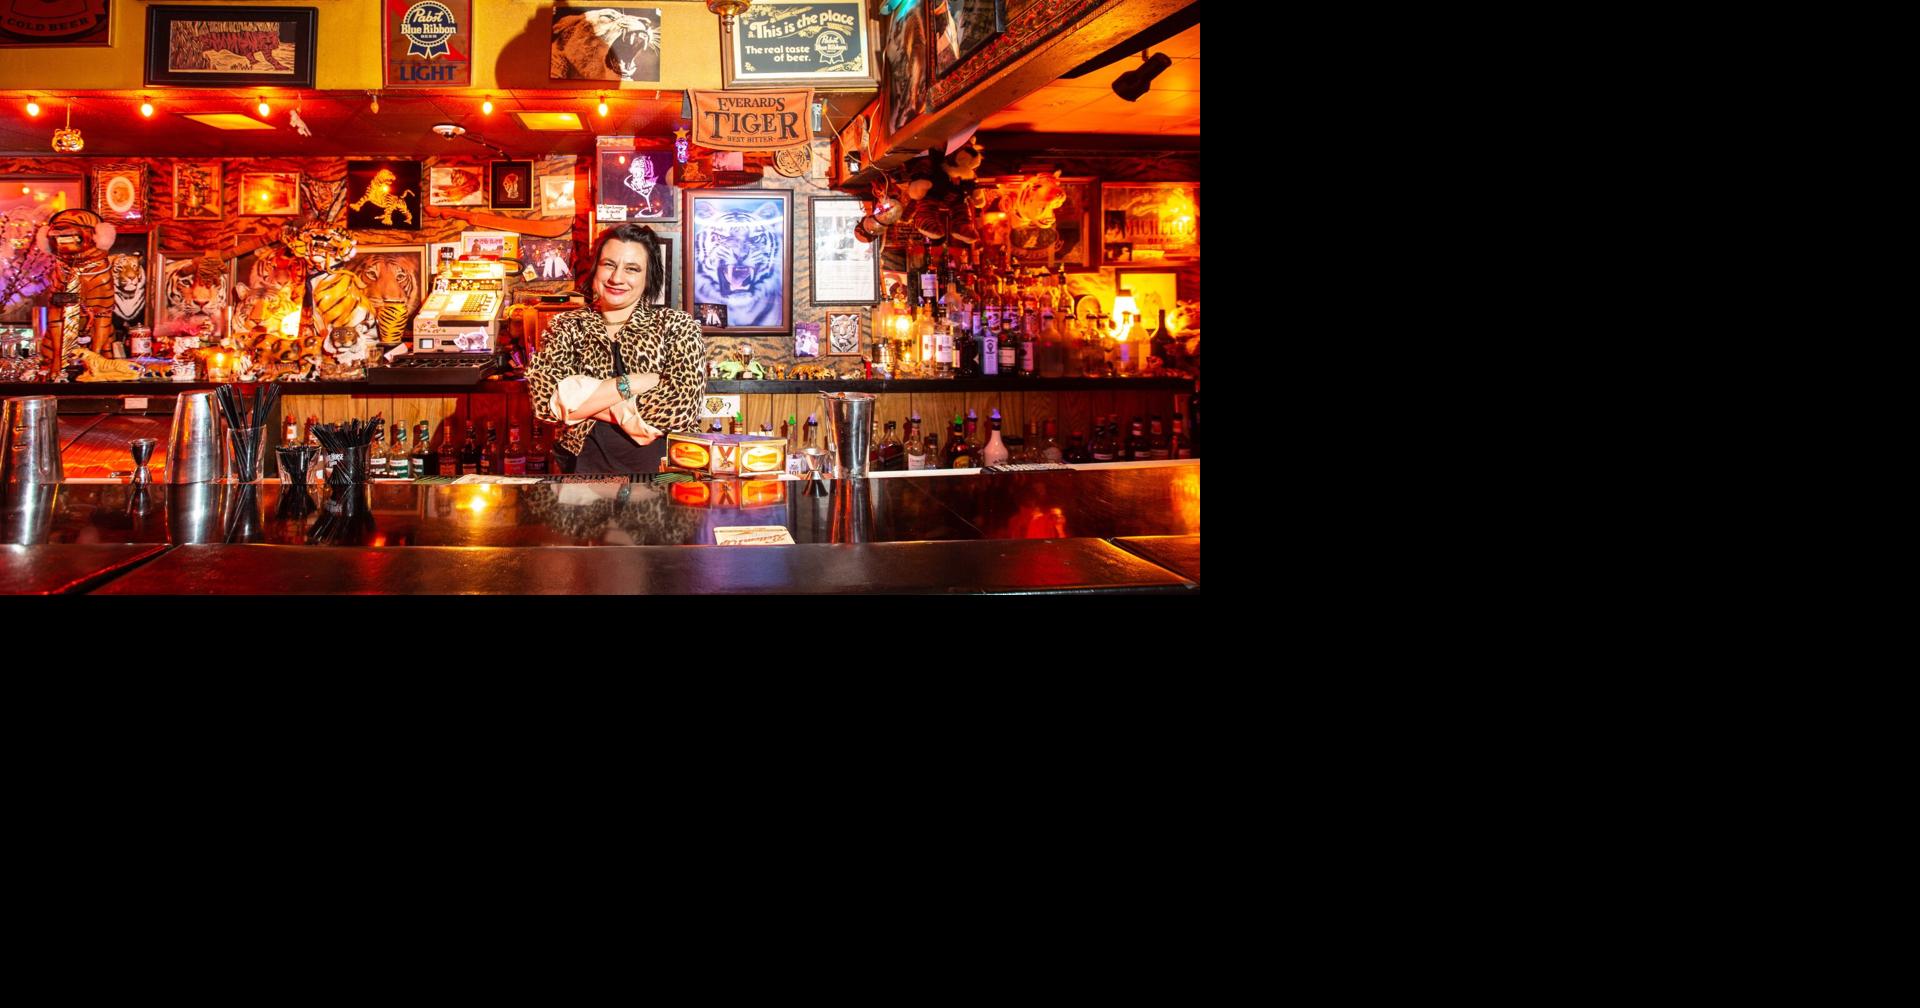 Employee of the Month: Blue Ribbon Brasserie's Bartender, James